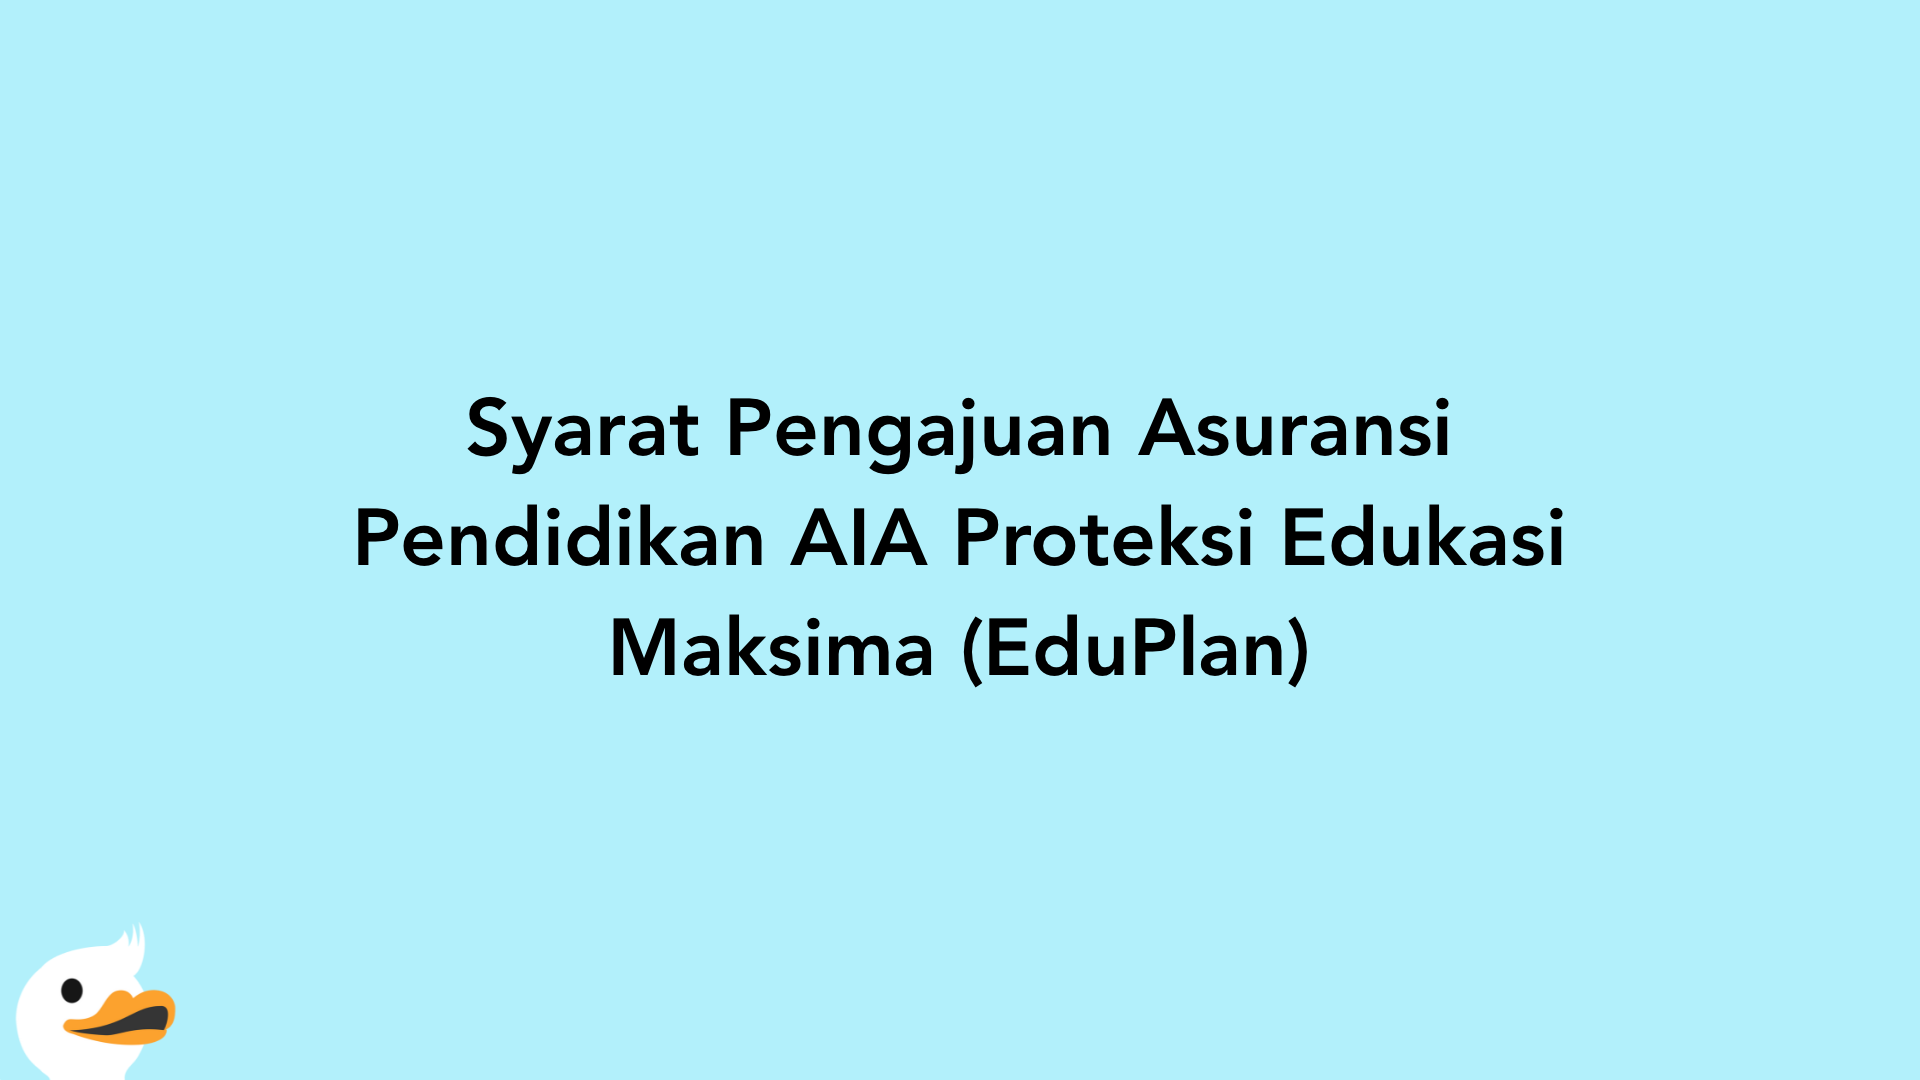 Syarat Pengajuan Asuransi Pendidikan AIA Proteksi Edukasi Maksima (EduPlan)